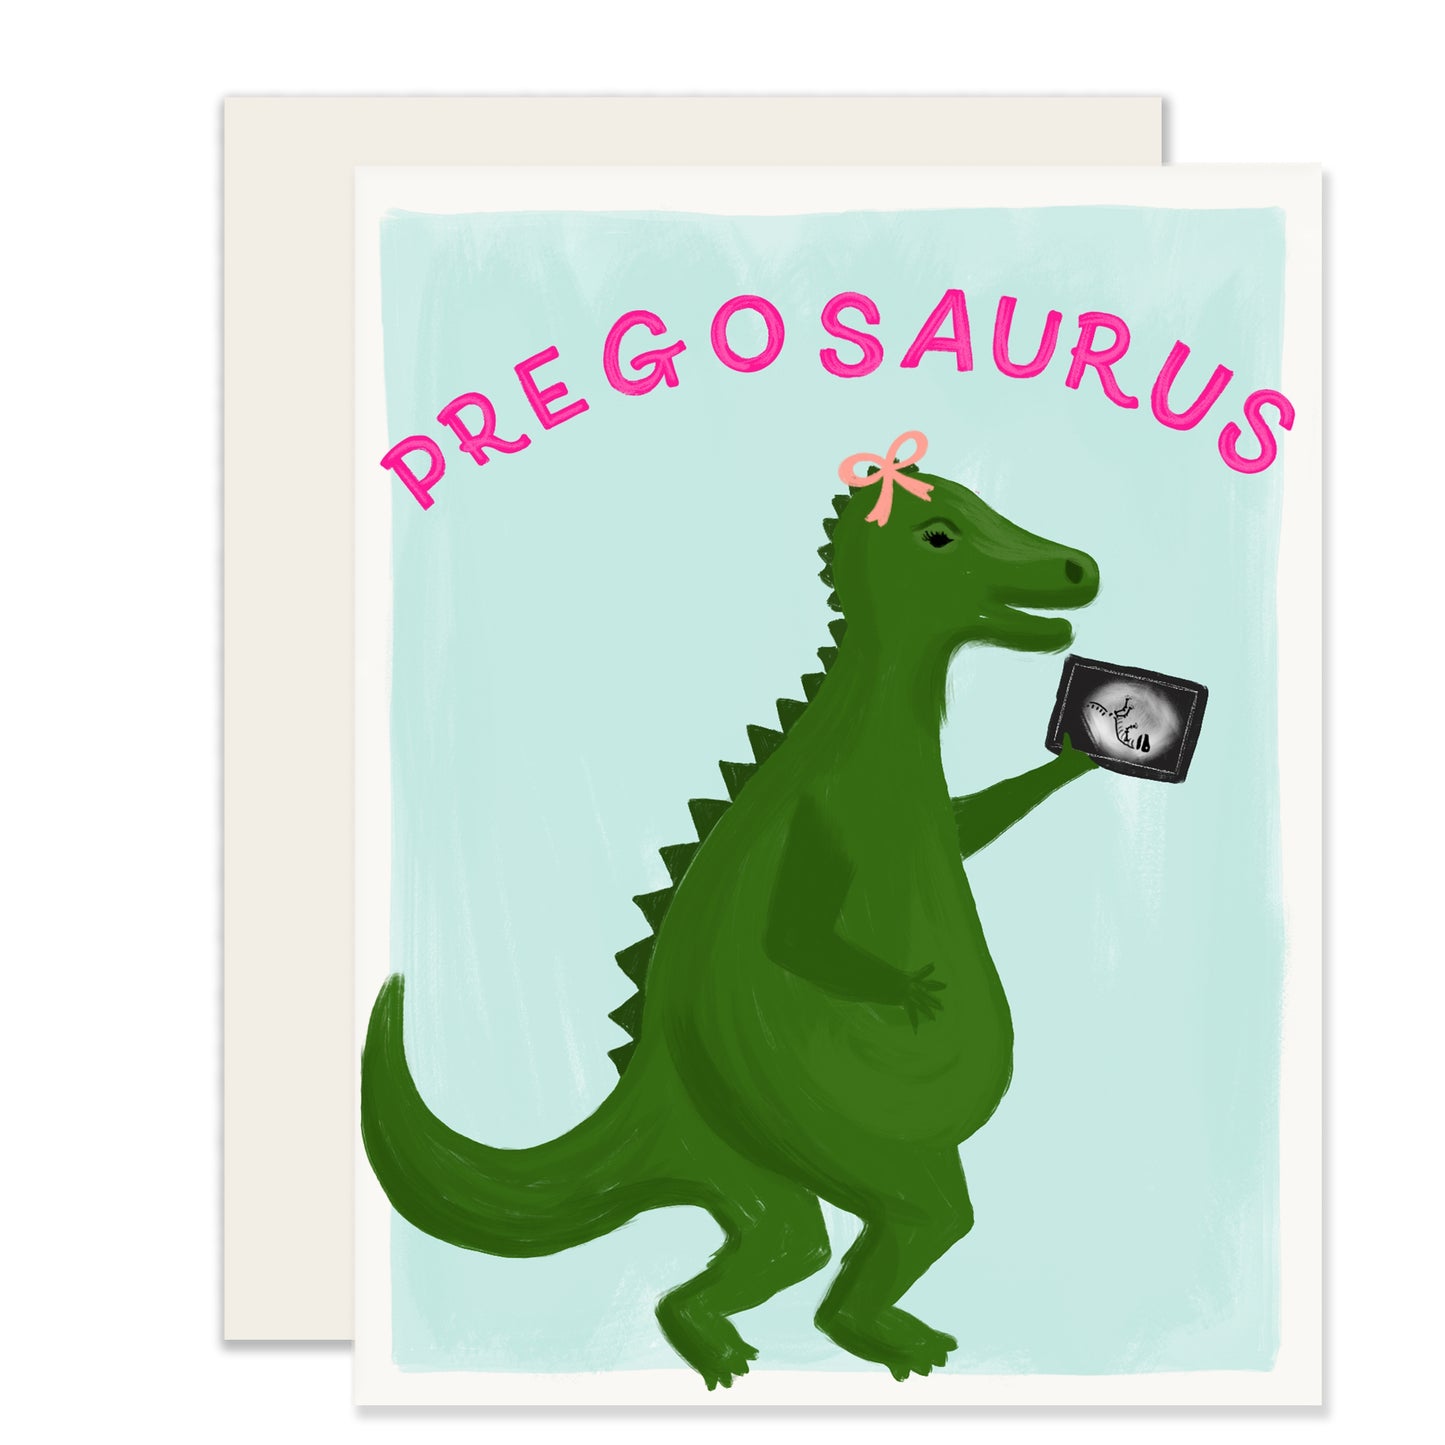 STATIONARY | Pregosaurus